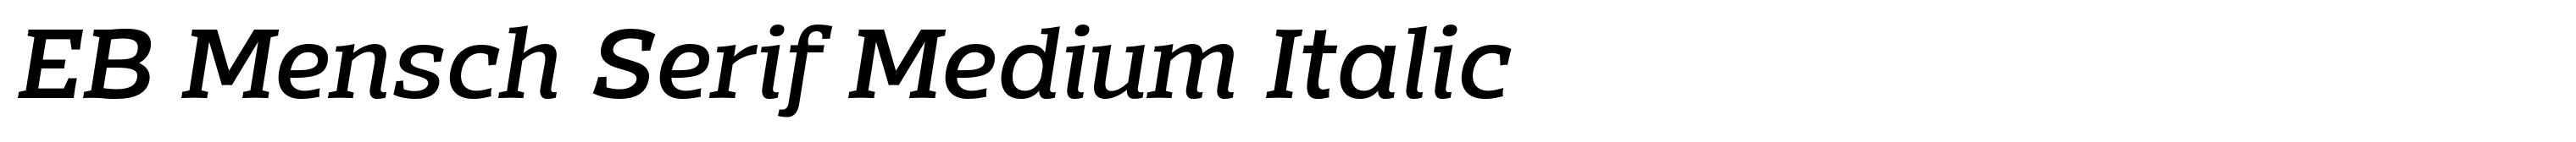 EB Mensch Serif Medium Italic